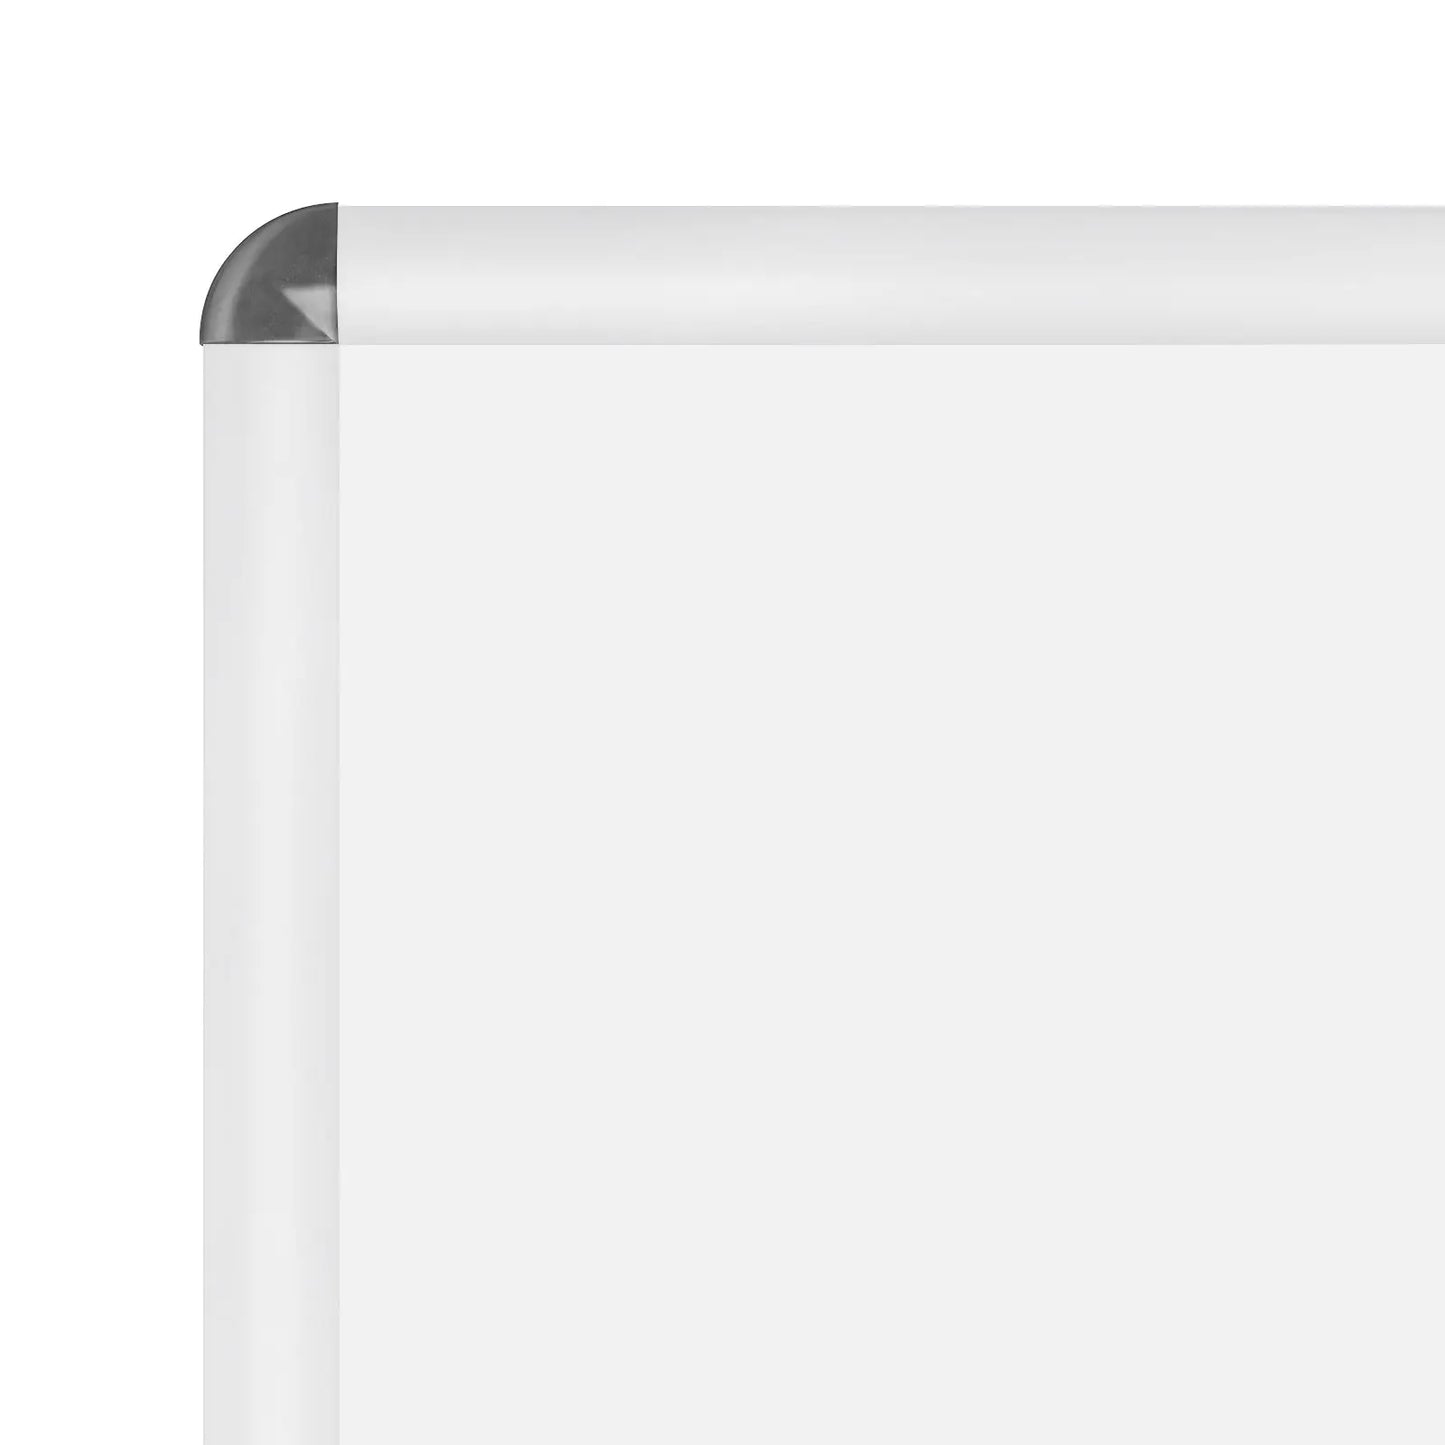 16x20 White SnapeZo® Round-Cornered - 1" Profile - Snap Frames Direct